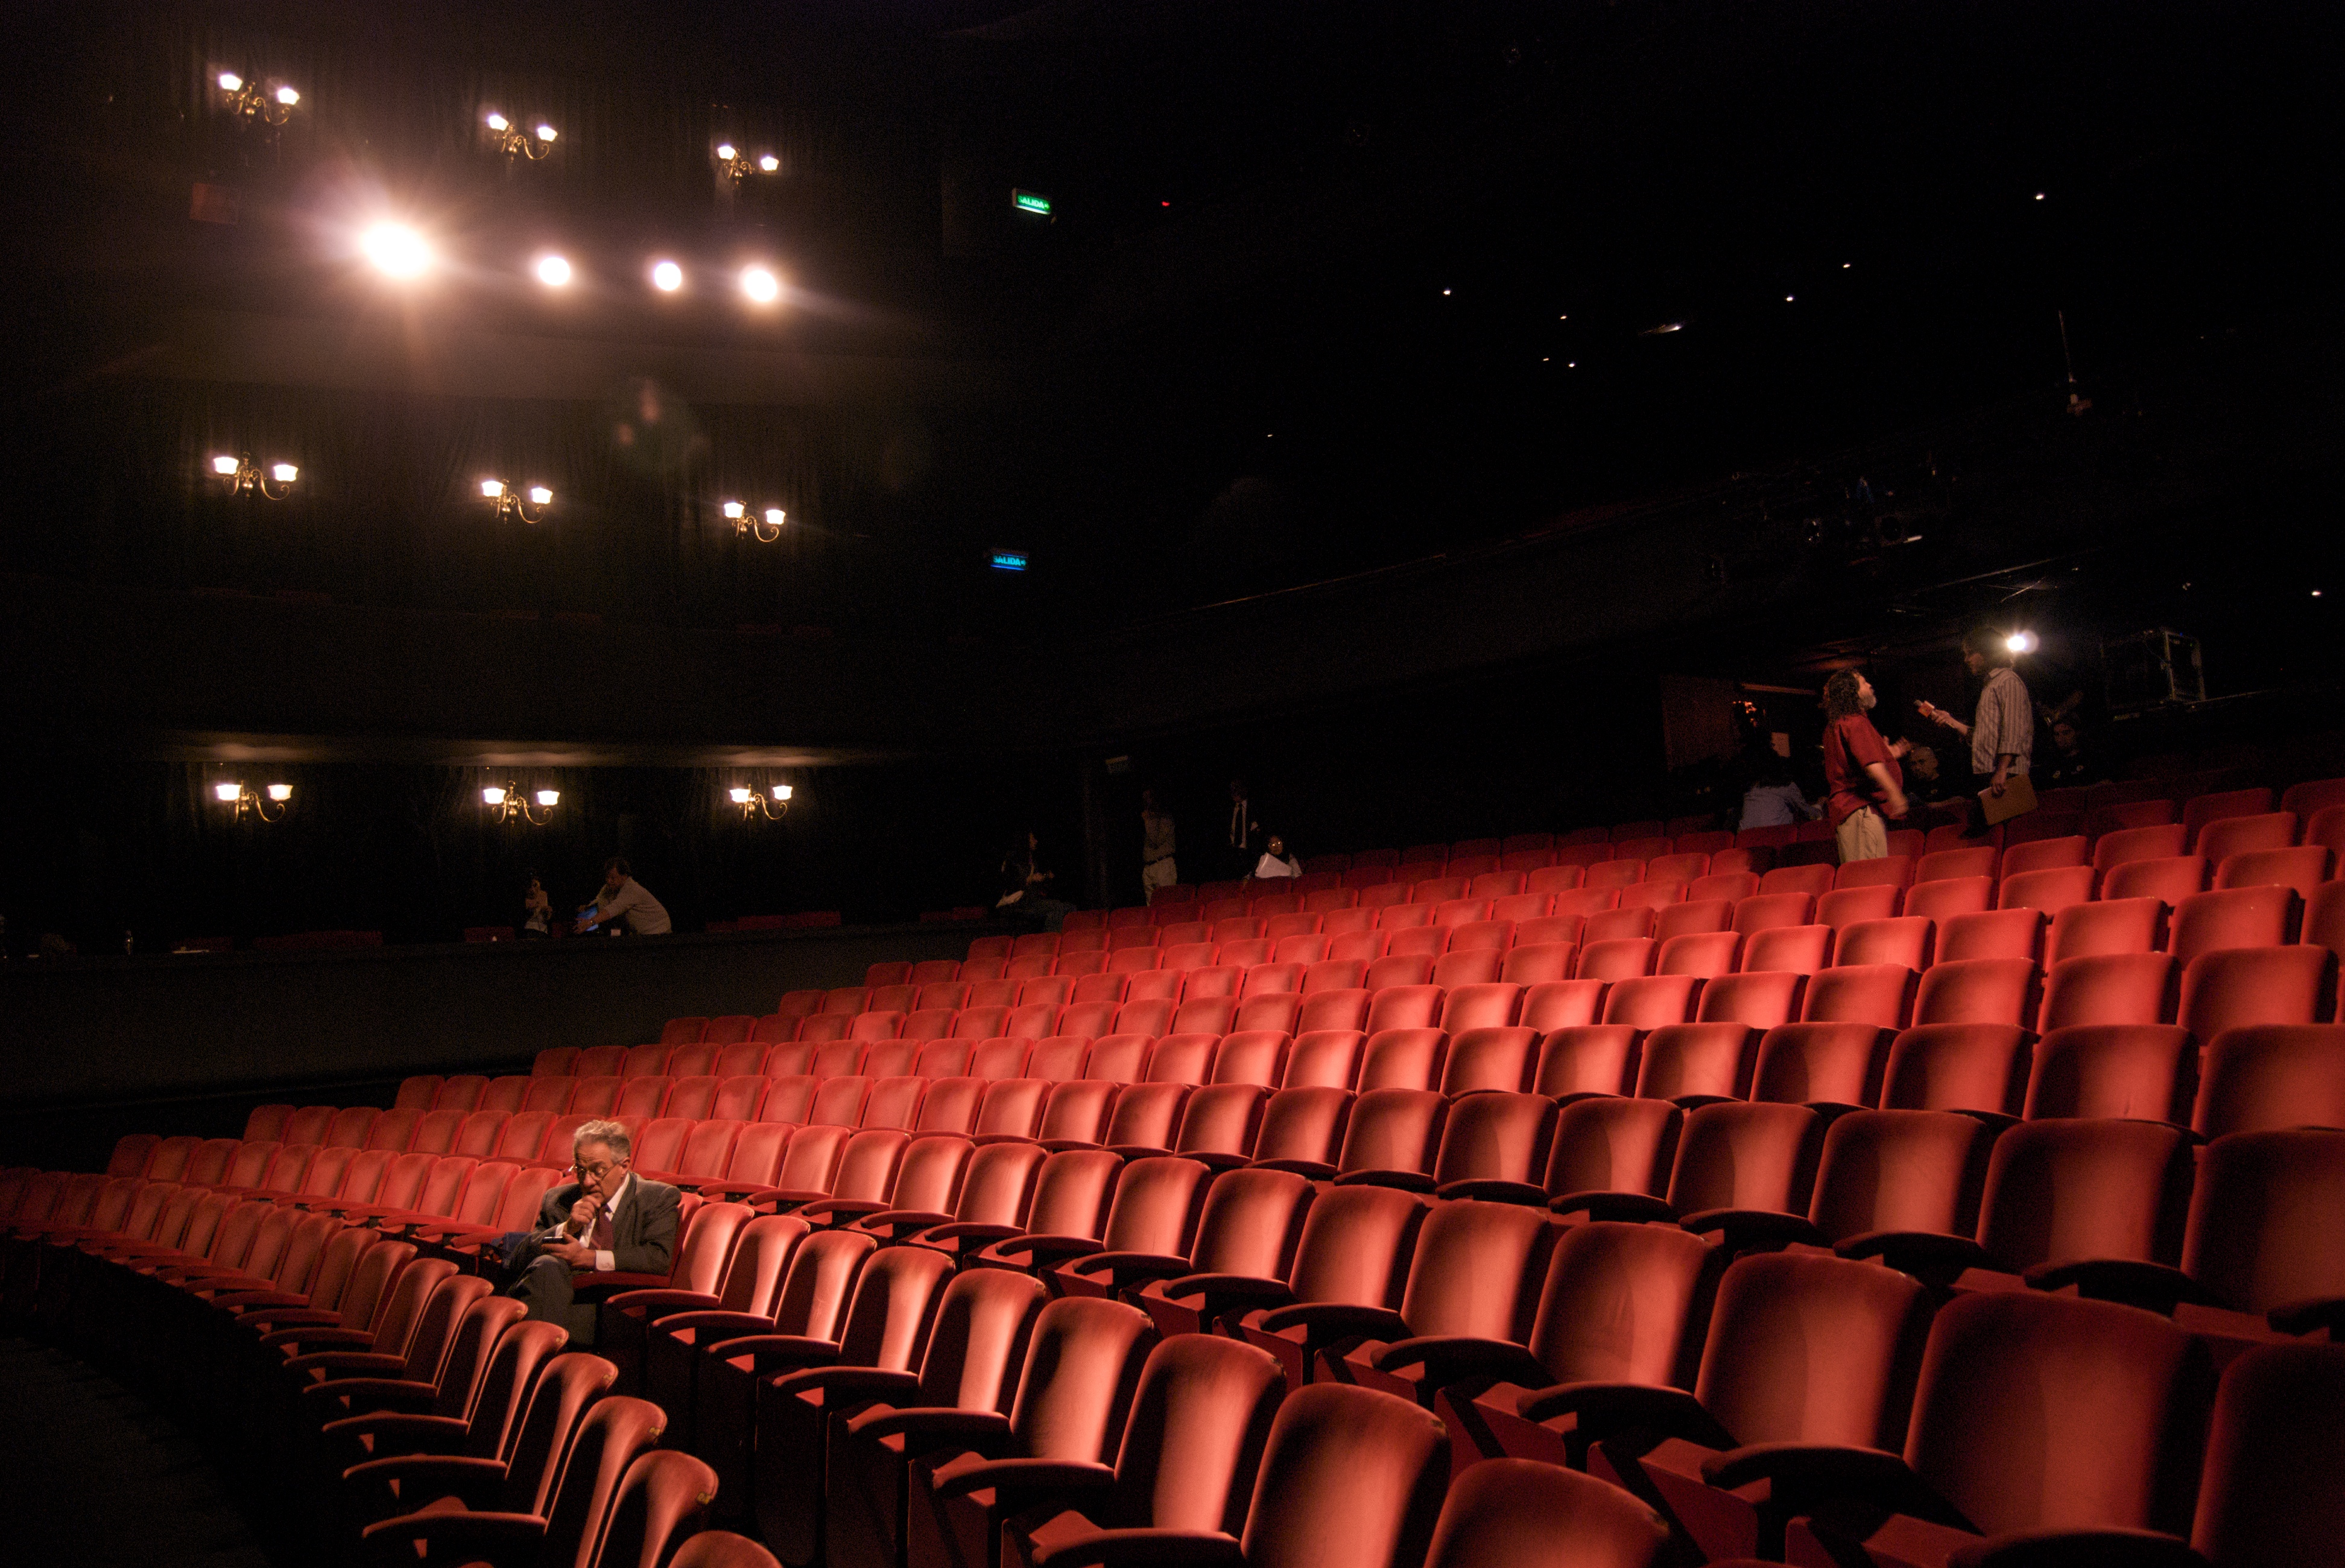 File:Richard in an empty theater.jpg - Wikimedia Commons